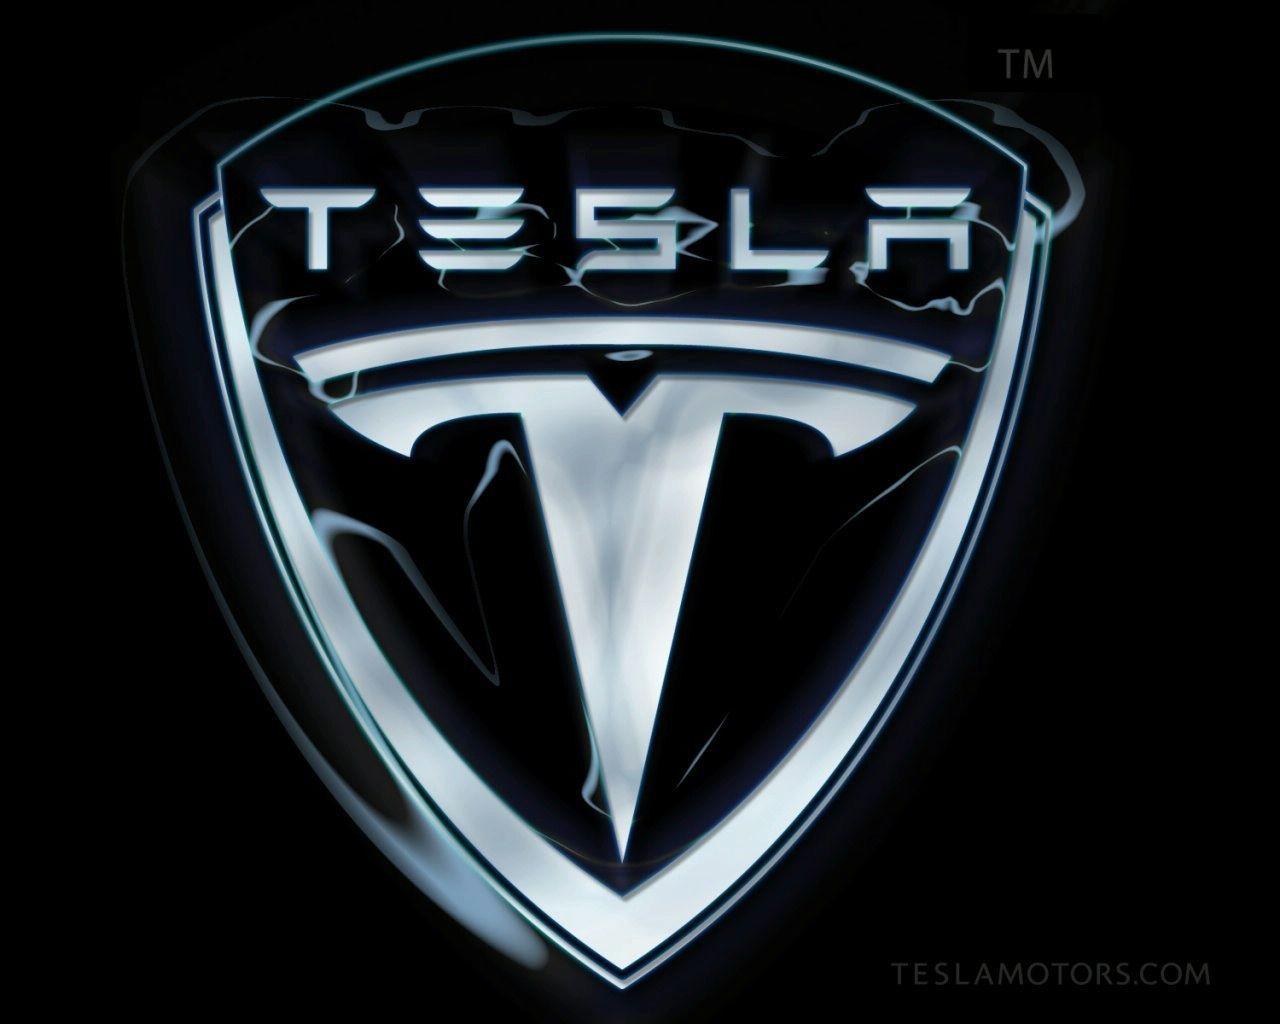 Tesla Roadster Logo - Tesla Motors Logo | Automotive | Pinterest | Tesla motors, Cars and ...